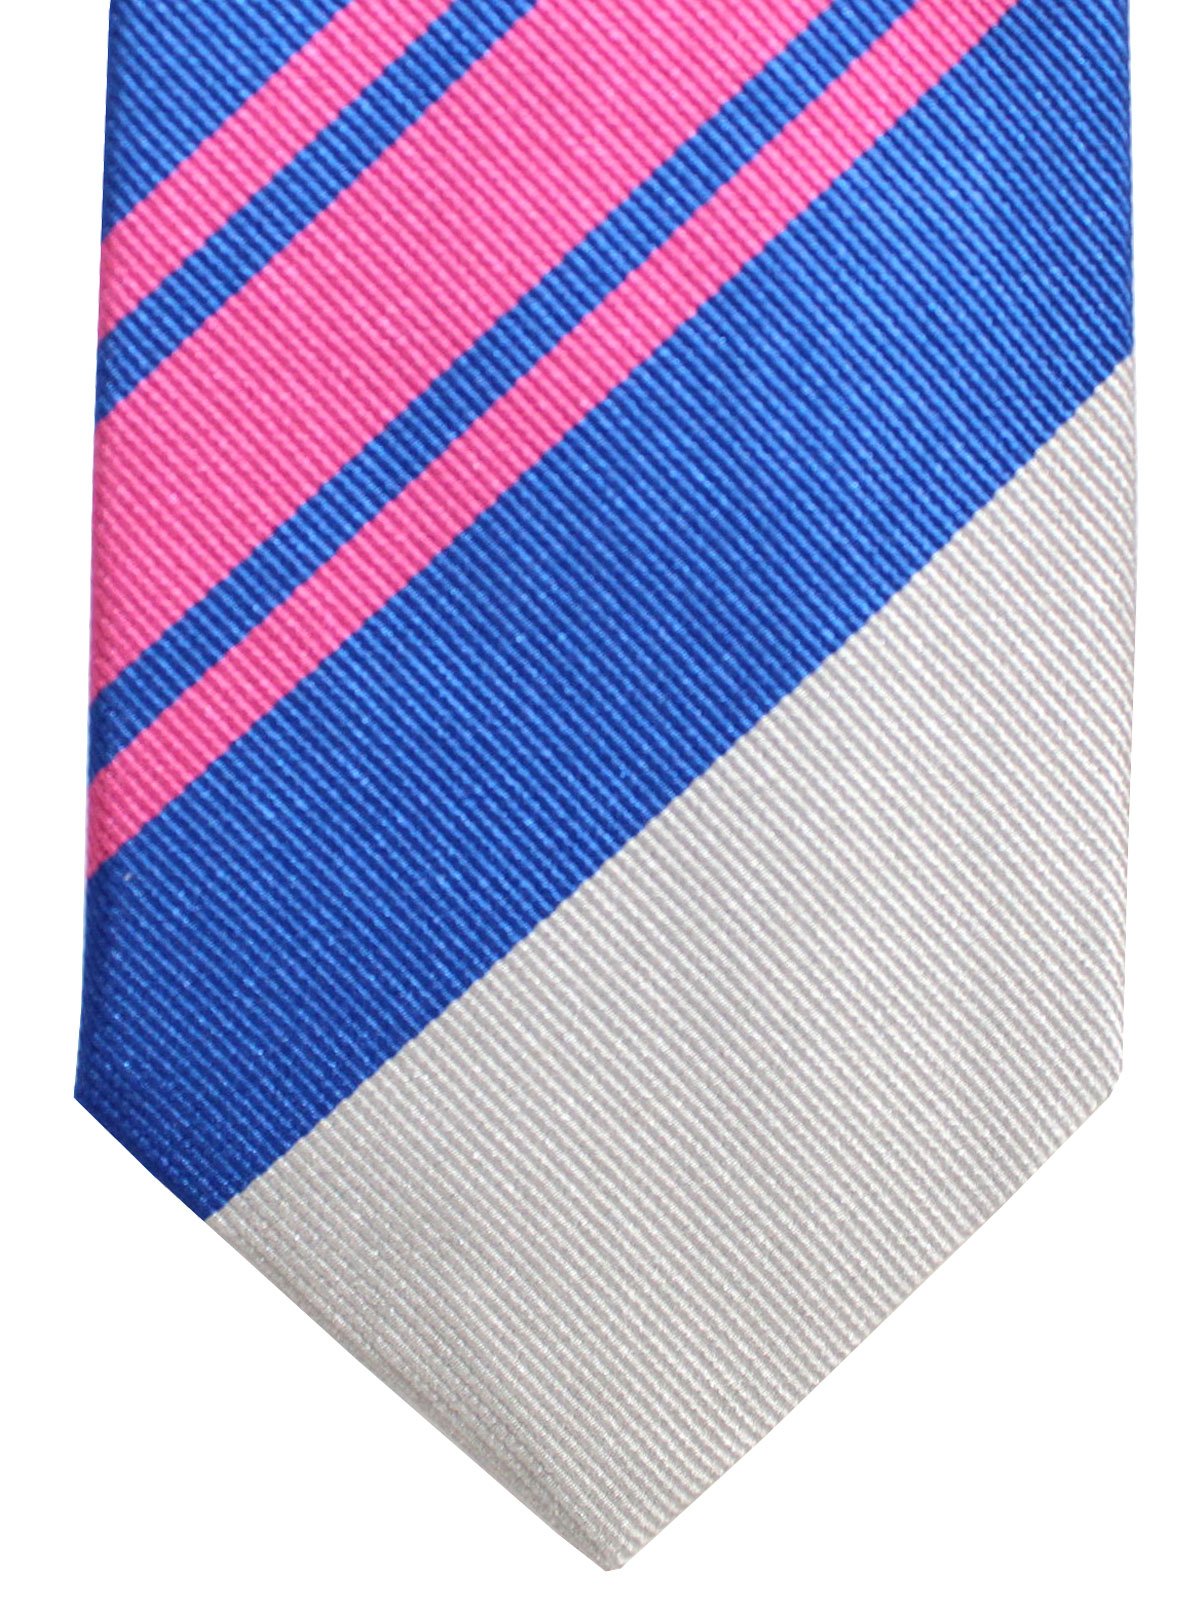 Gene Meyer Necktie Royal Pink Stripes Design - Hand Made In Italy